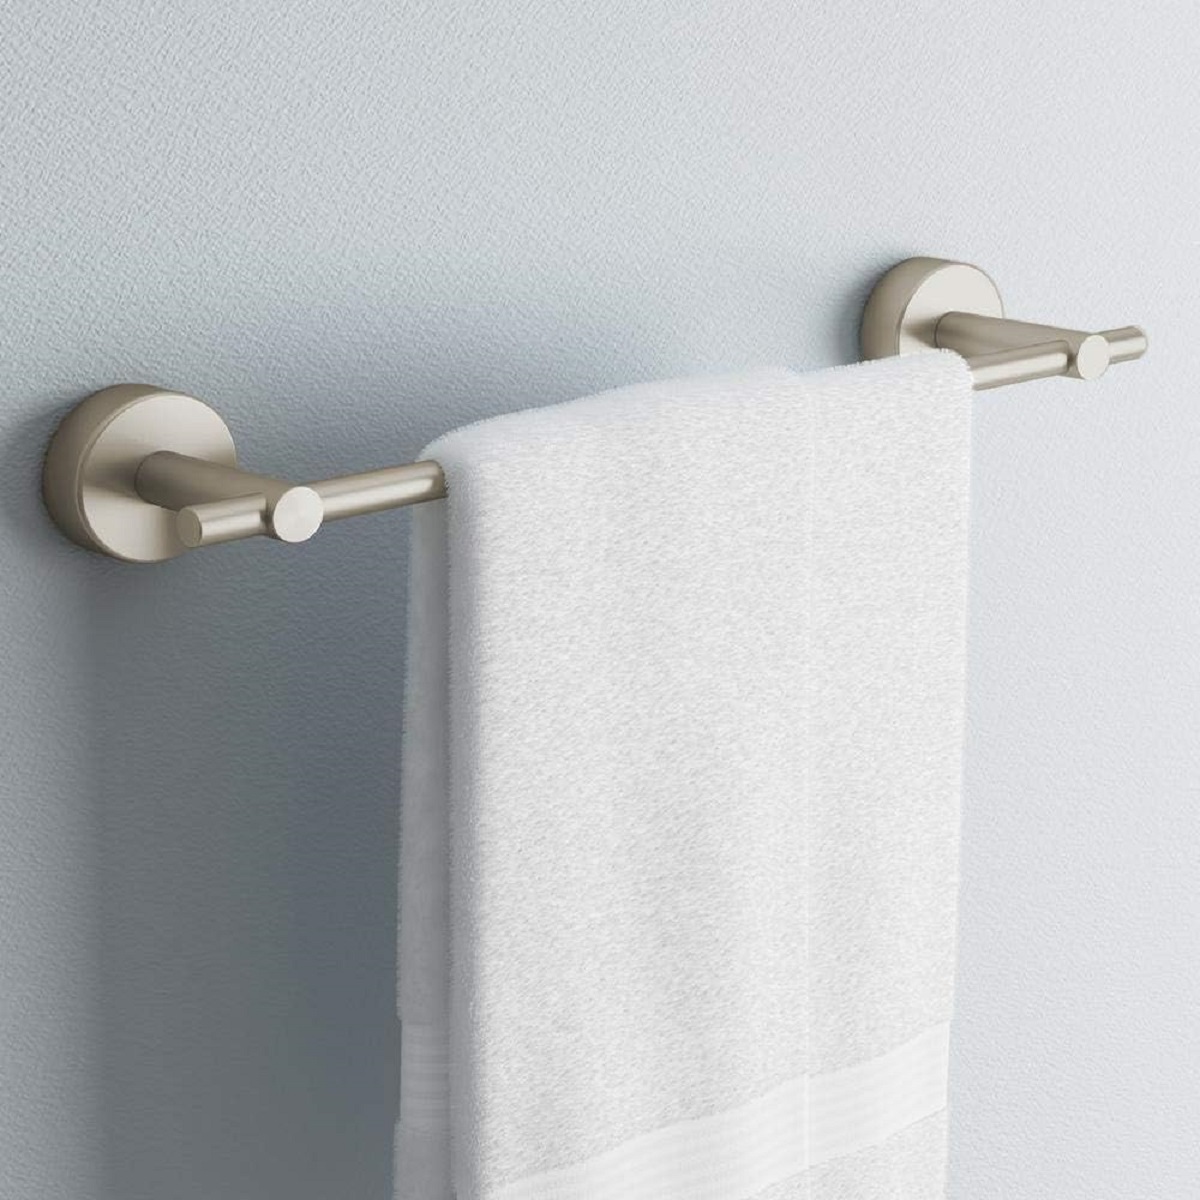 How To Install Glacier Bay Towel Bar